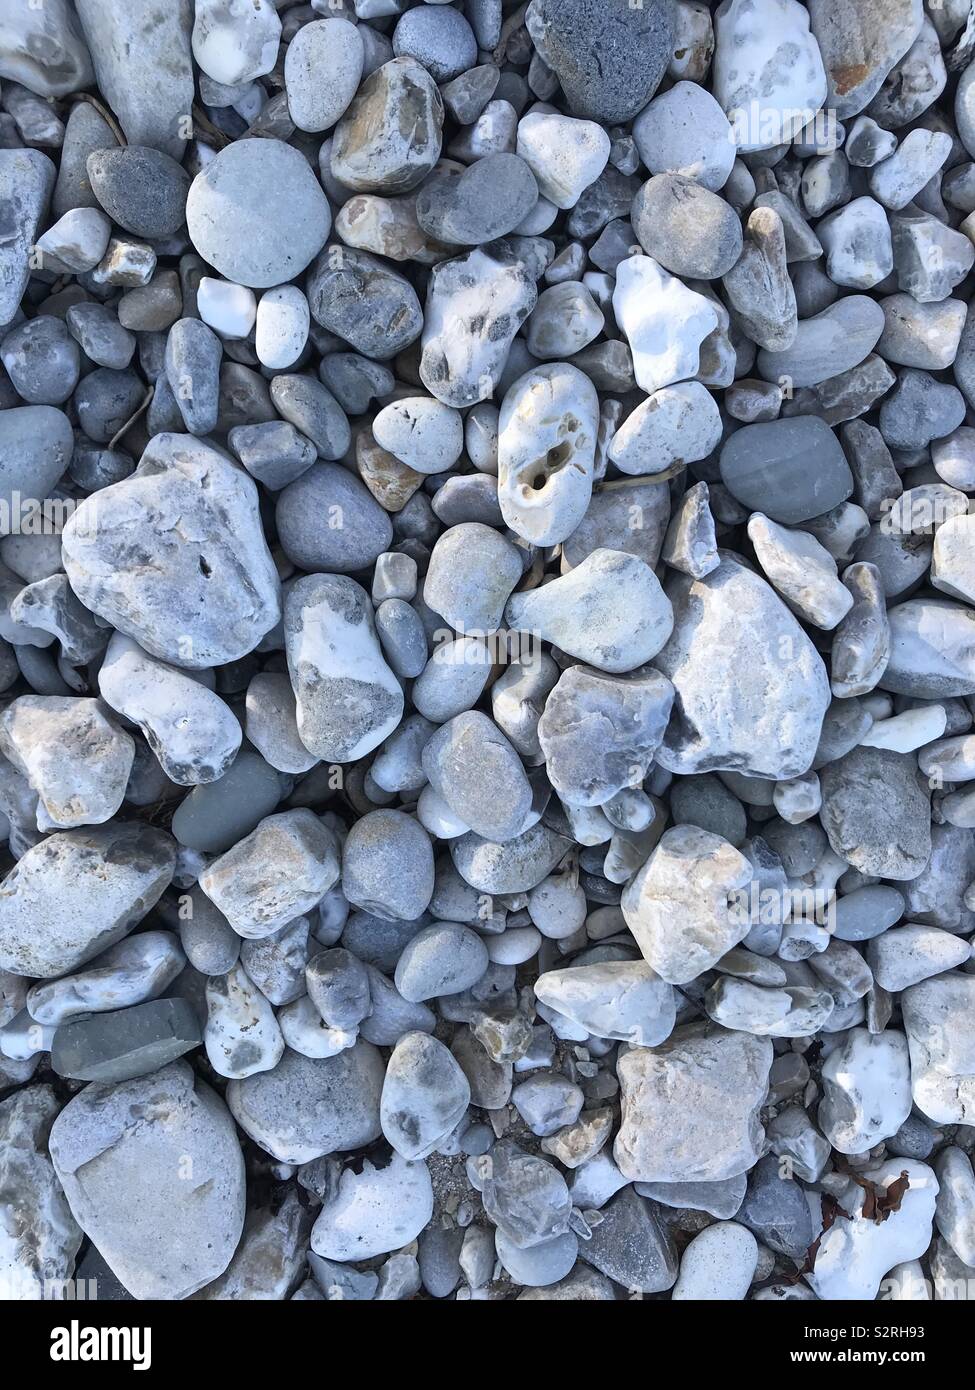 Beach pebbles Stock Photo